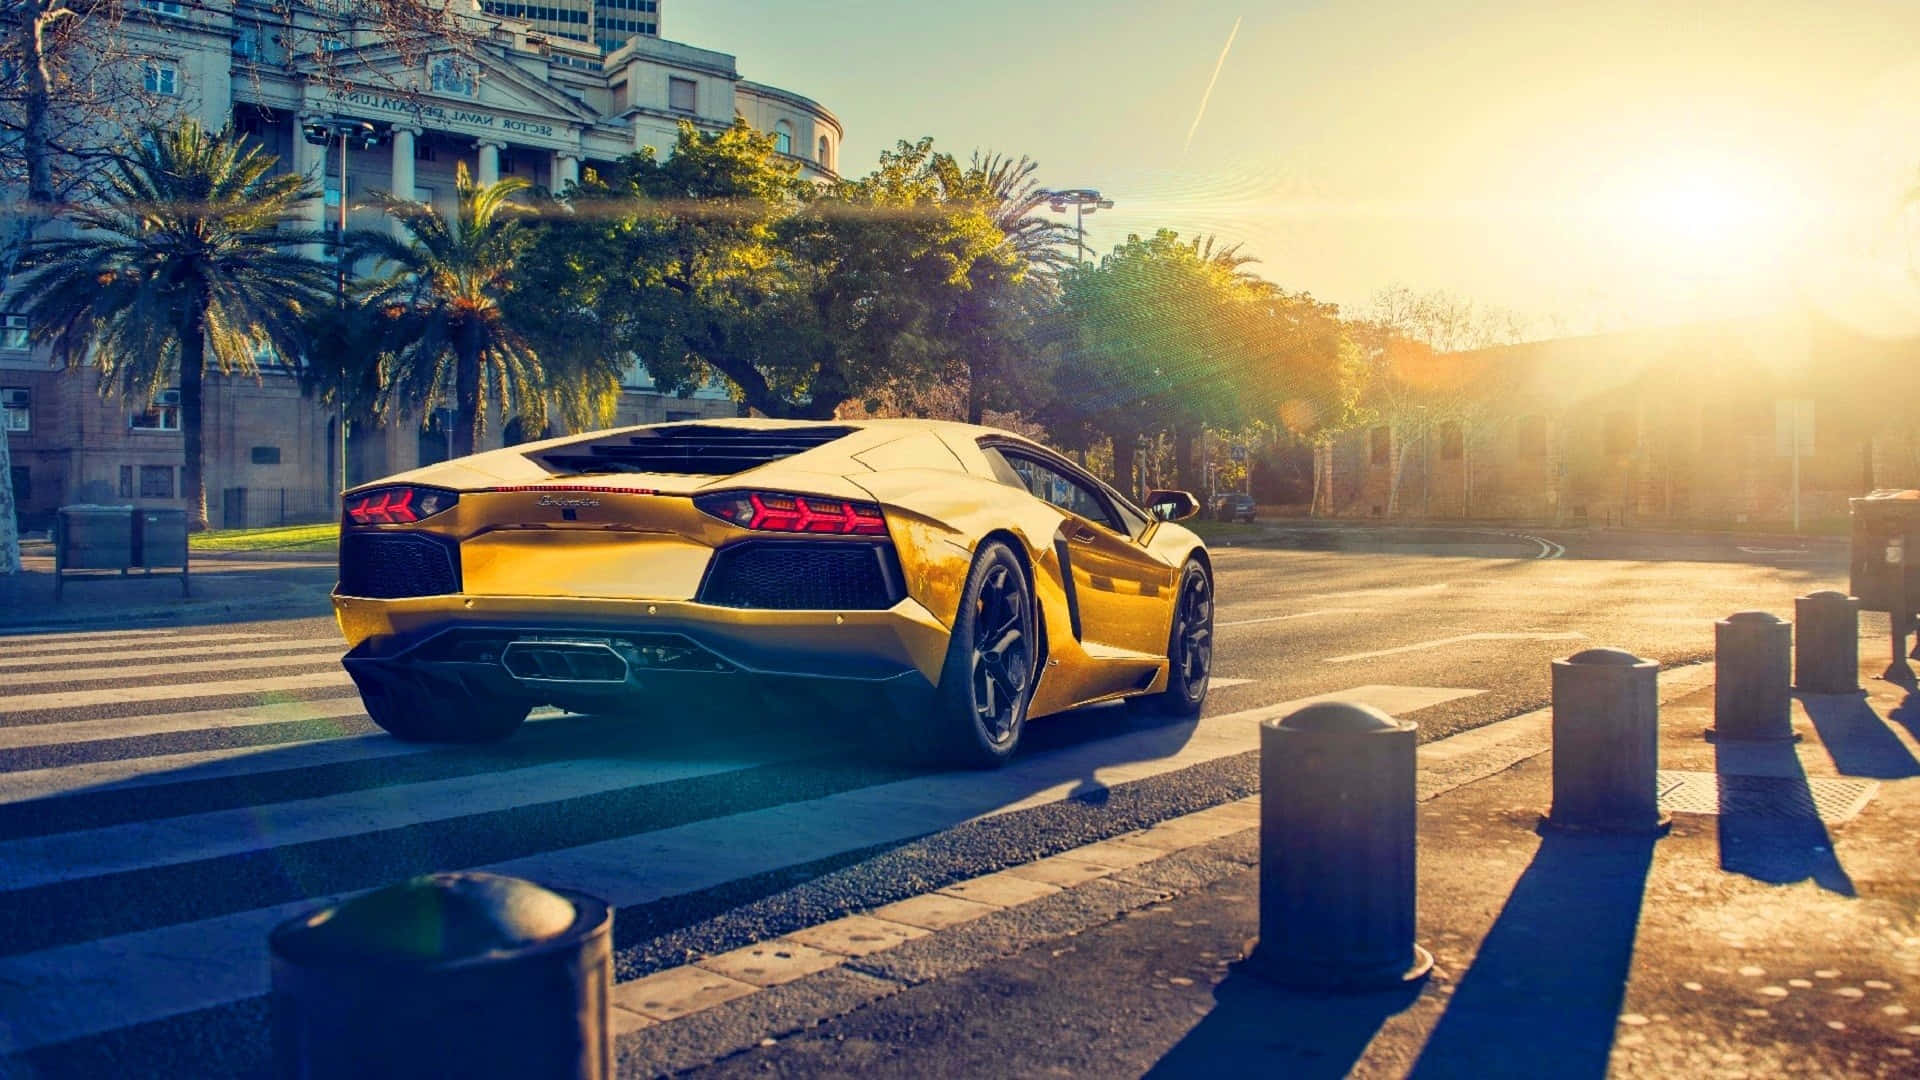 “shine Bright Like A Diamond: Luxury Gold Car” Background